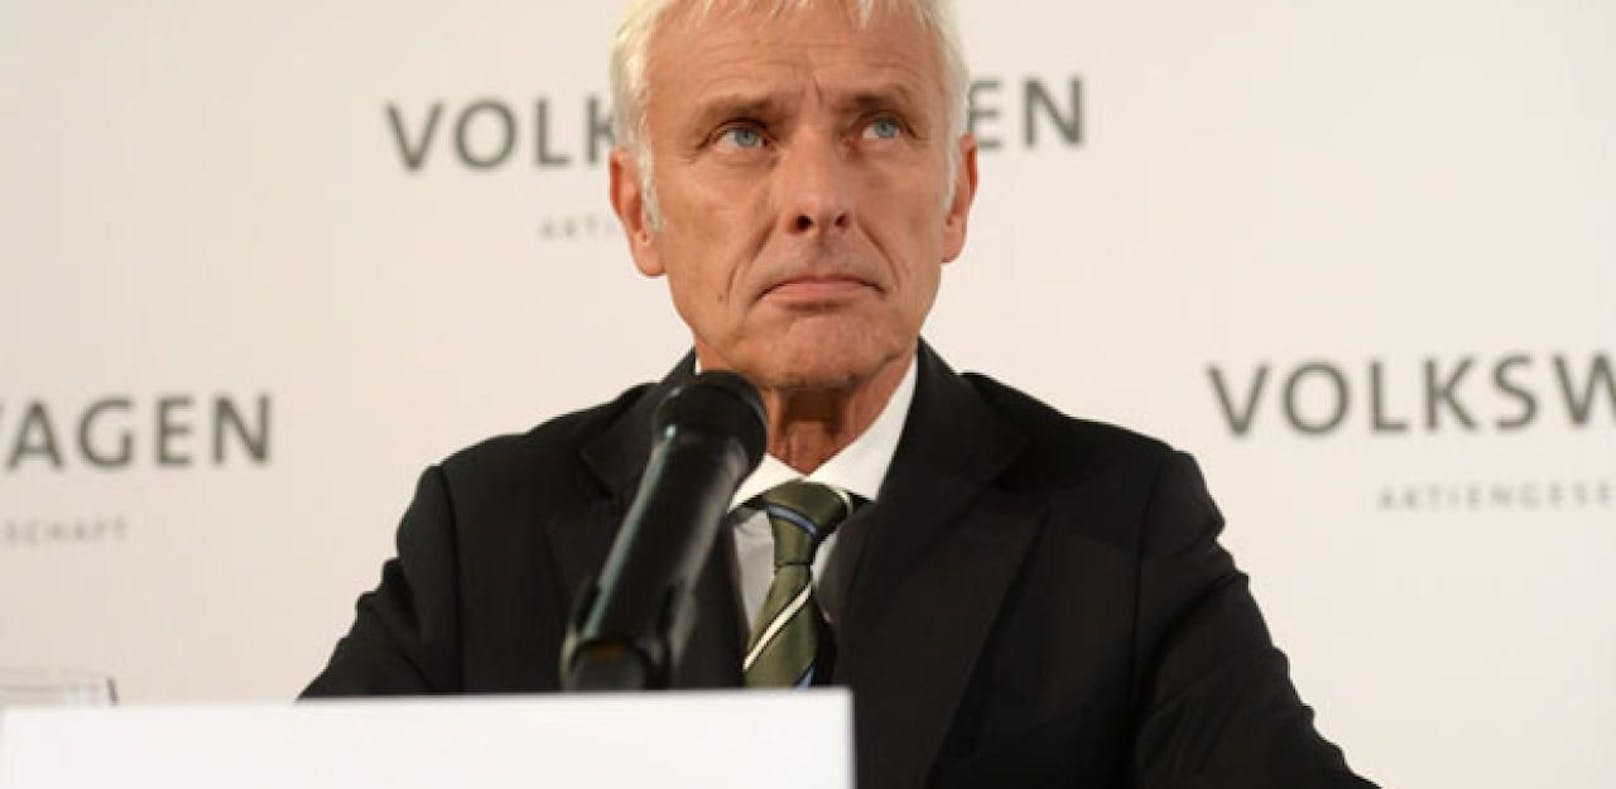 Abgas-Skandal: Gegen VW-Chef wird ermittelt